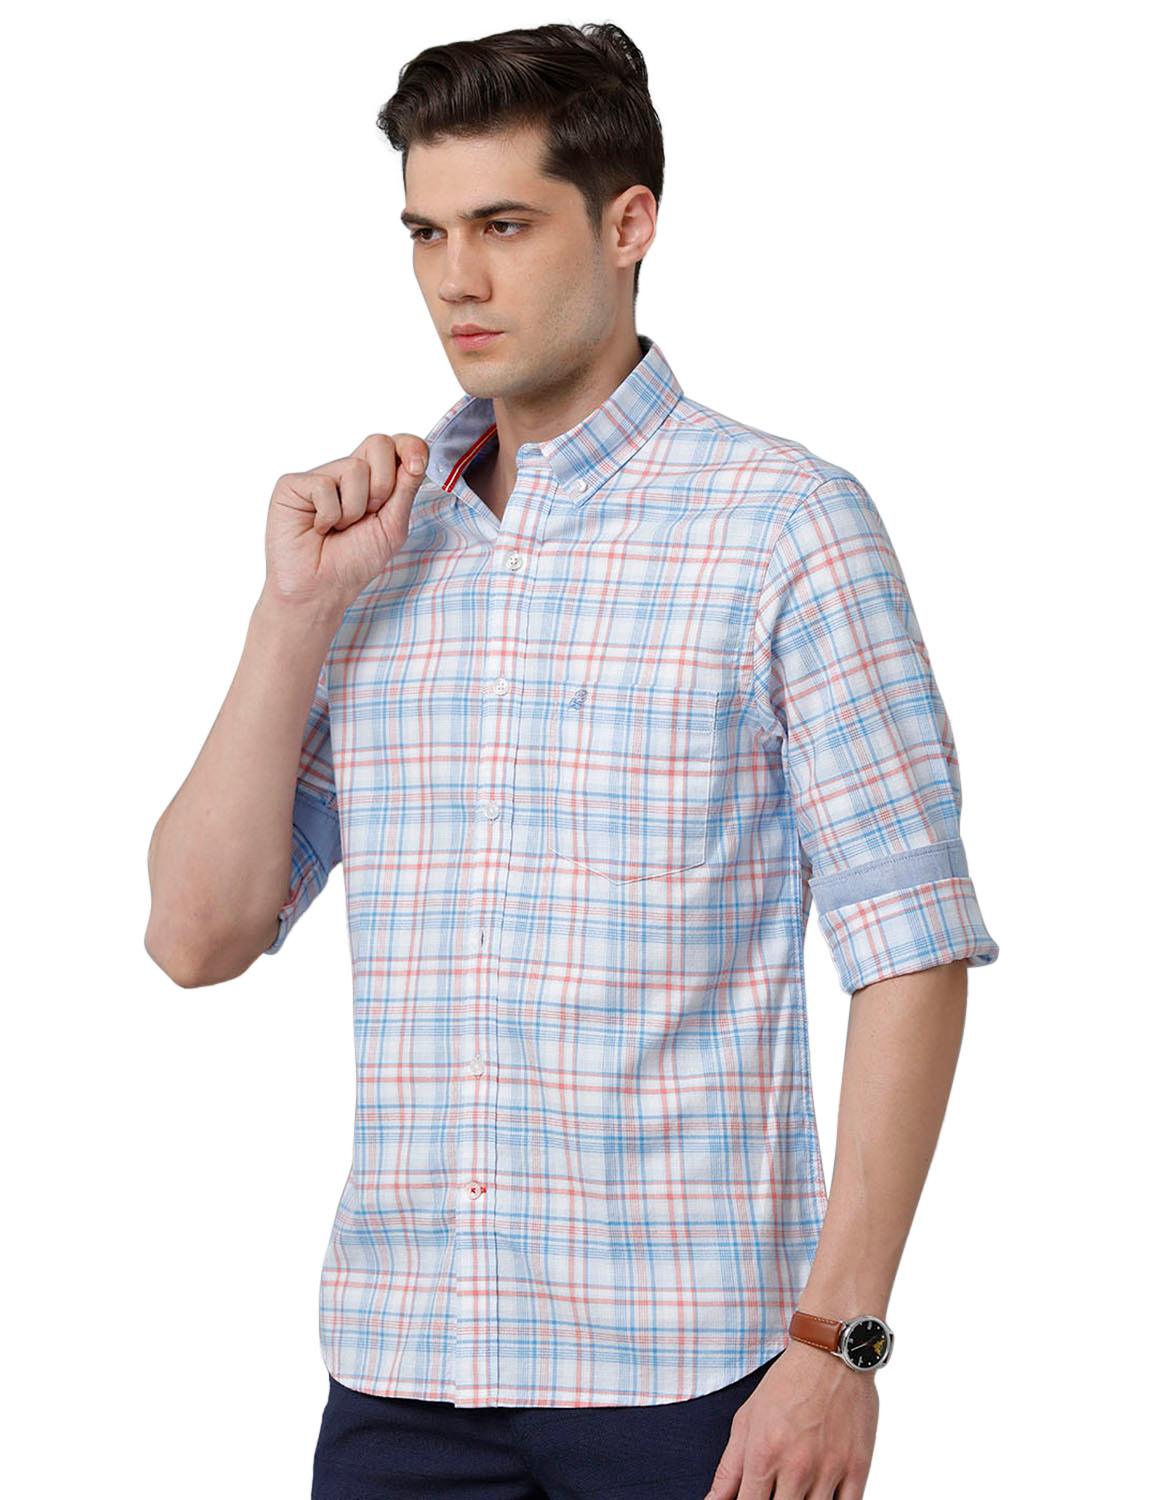 LightBlue Checks Slim Fit Shirt - Double Two